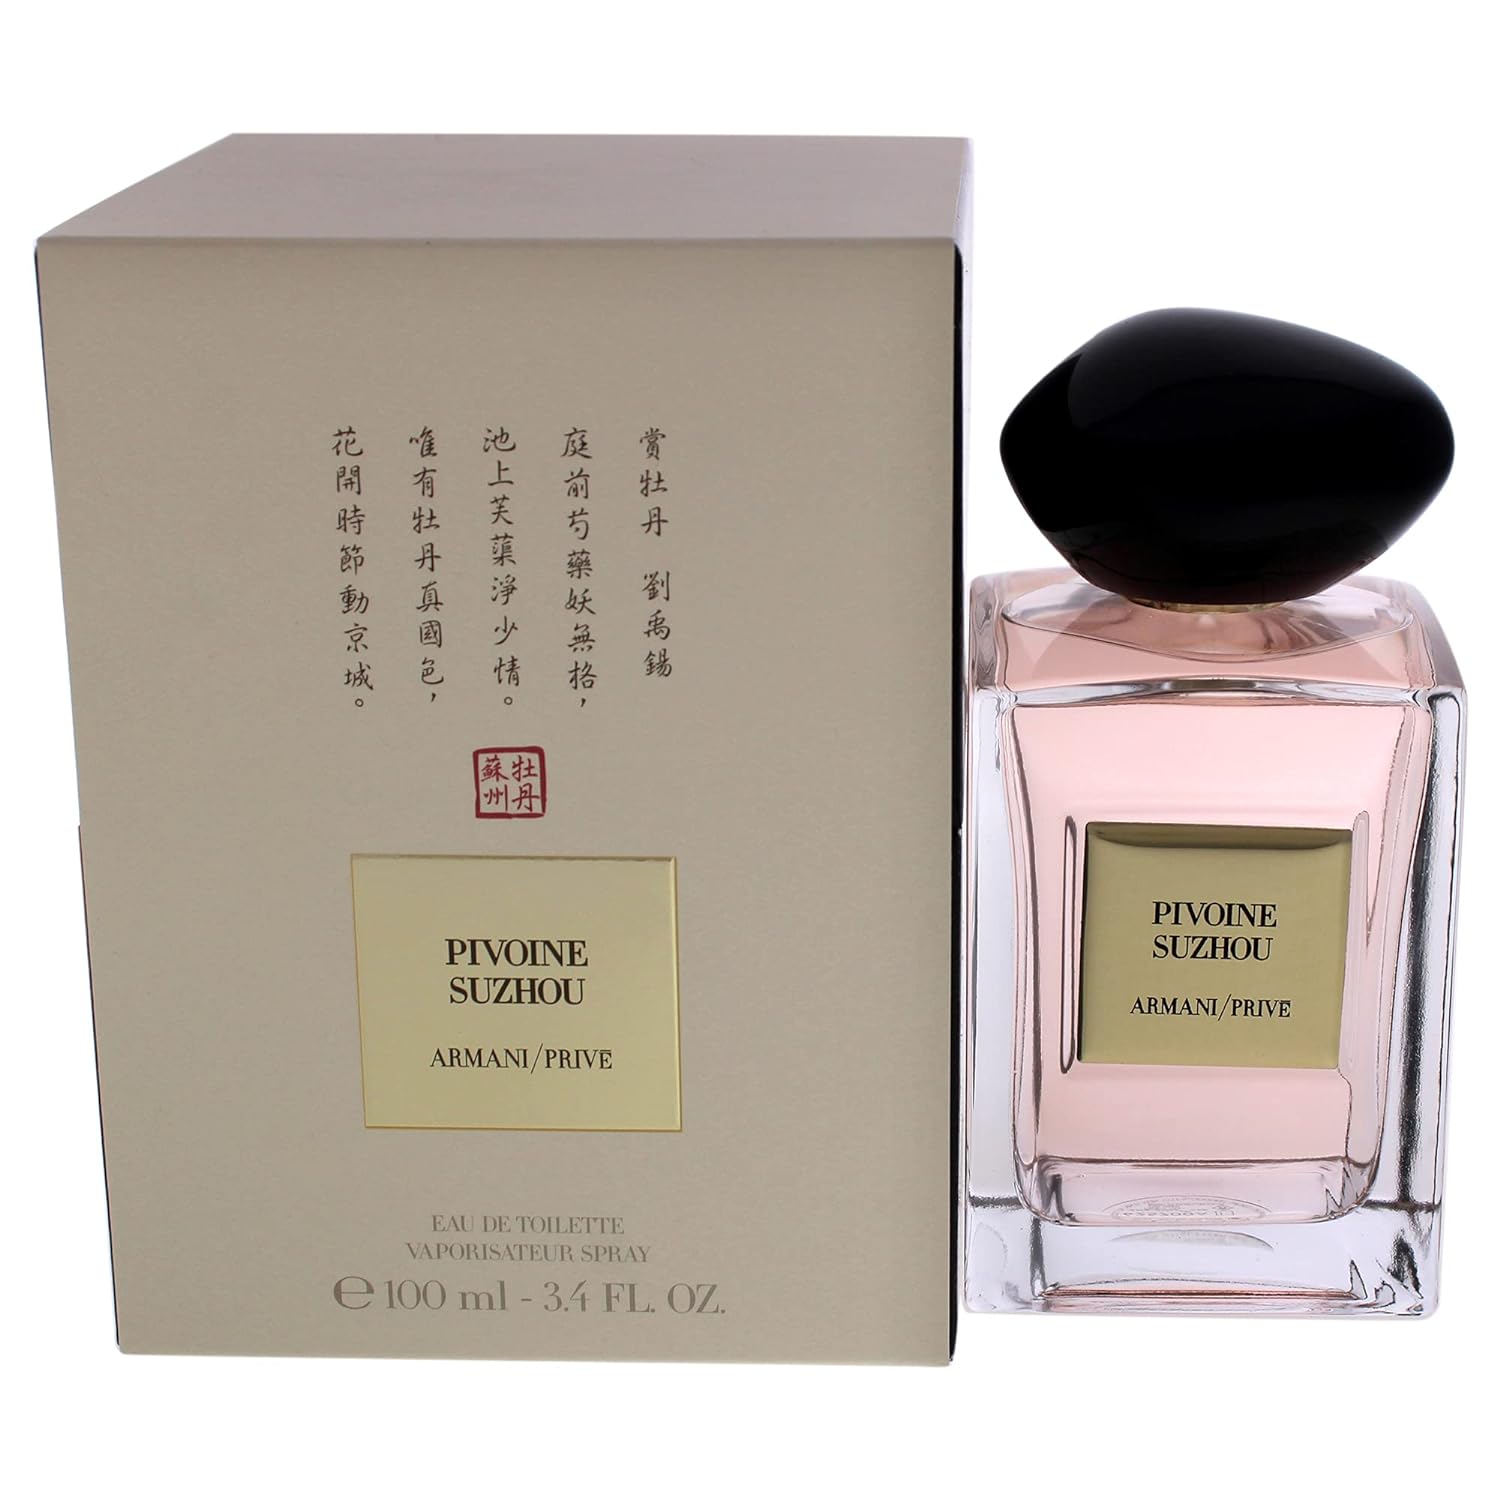 Giorgio Armani Prive Pivoine Suzhou EDT | My Perfume Shop Australia